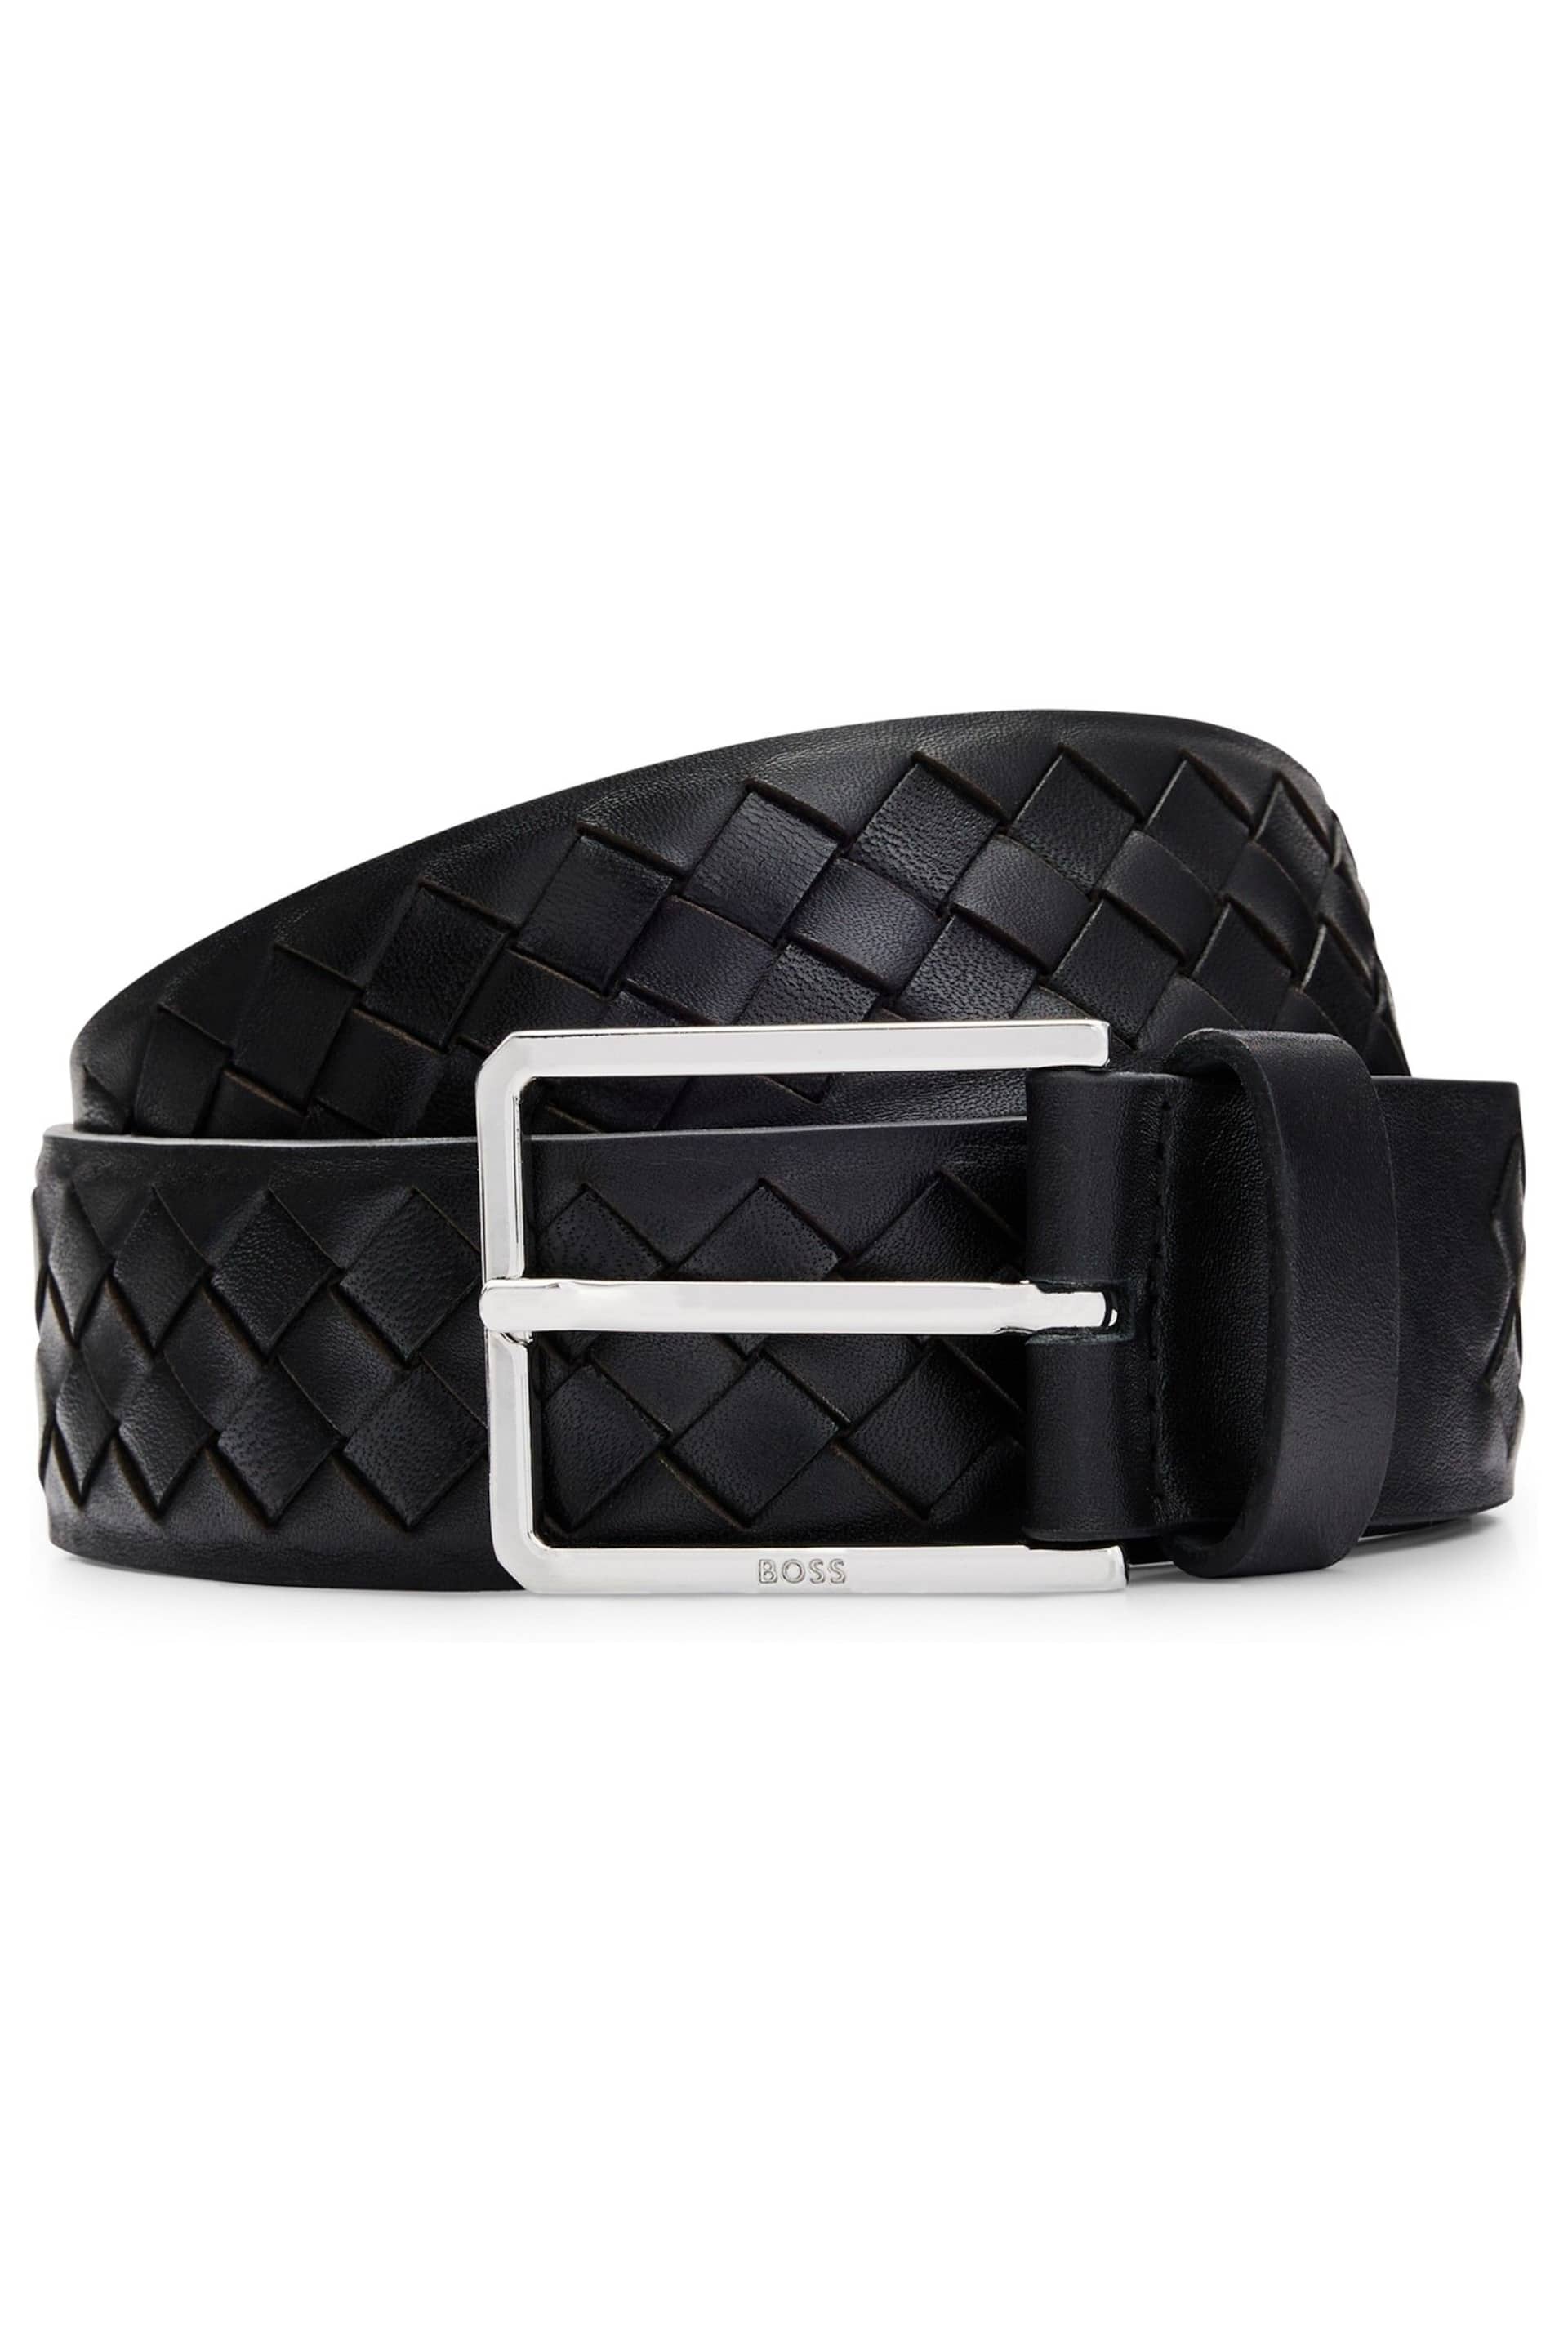 BOSS Black Woven Leather Belt - Image 1 of 5